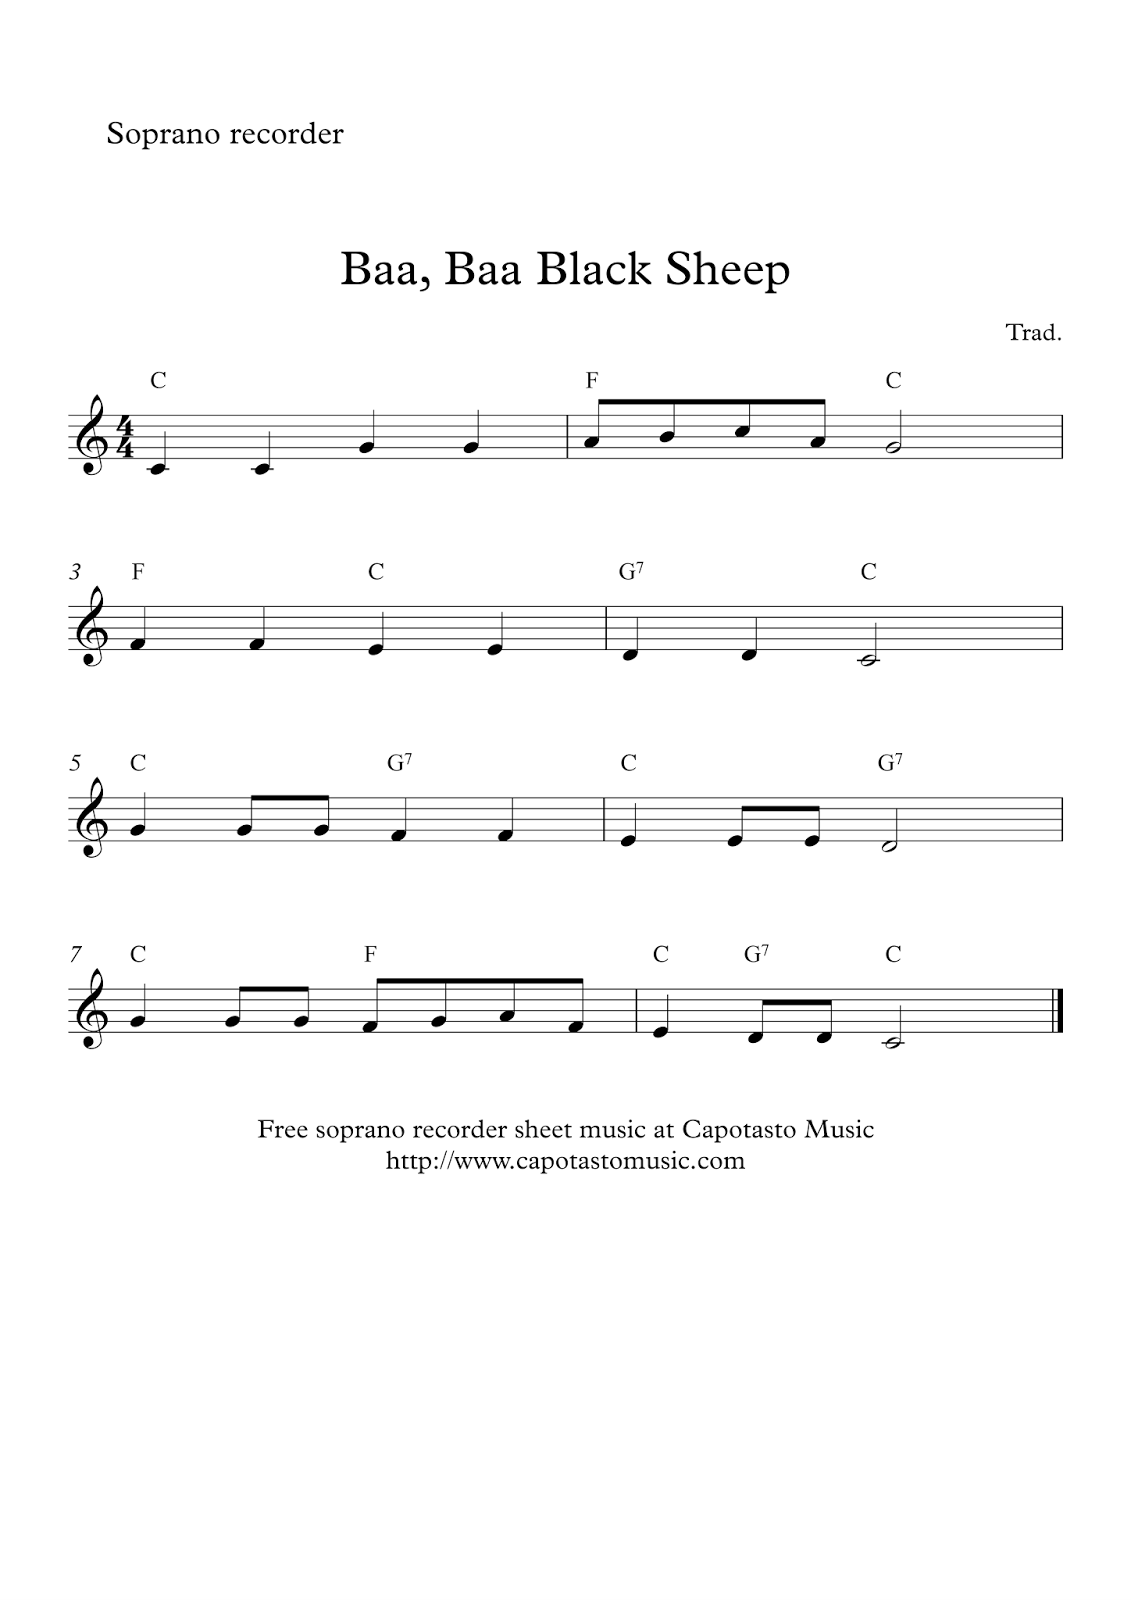 Free soprano recorder sheet music Baa, Baa Black Sheep